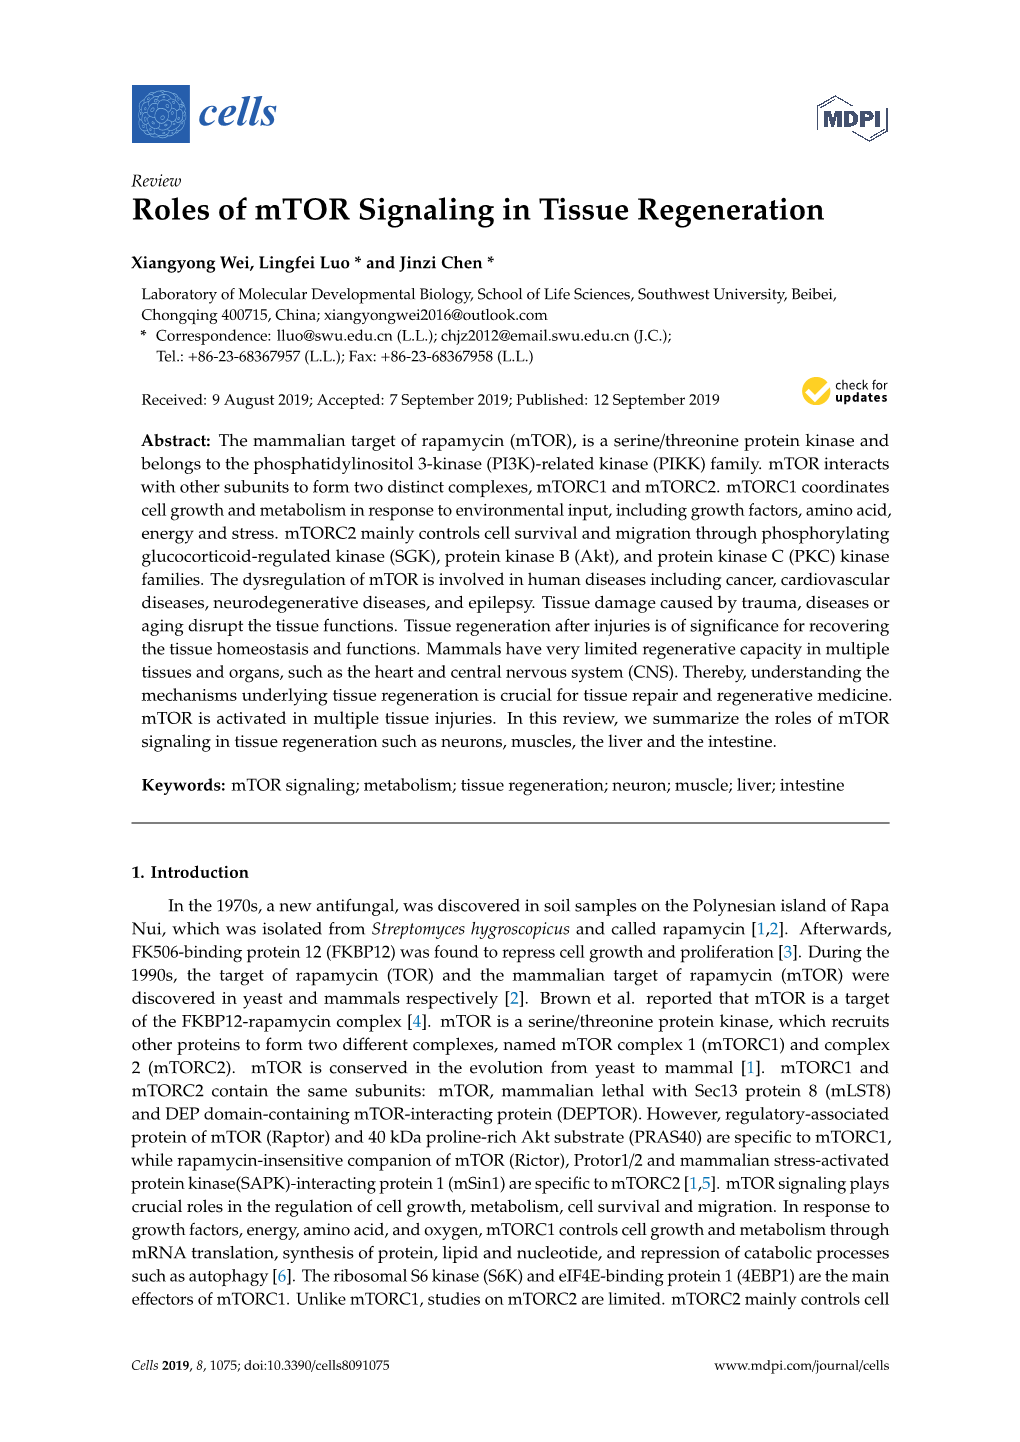 Roles of Mtor Signaling in Tissue Regeneration